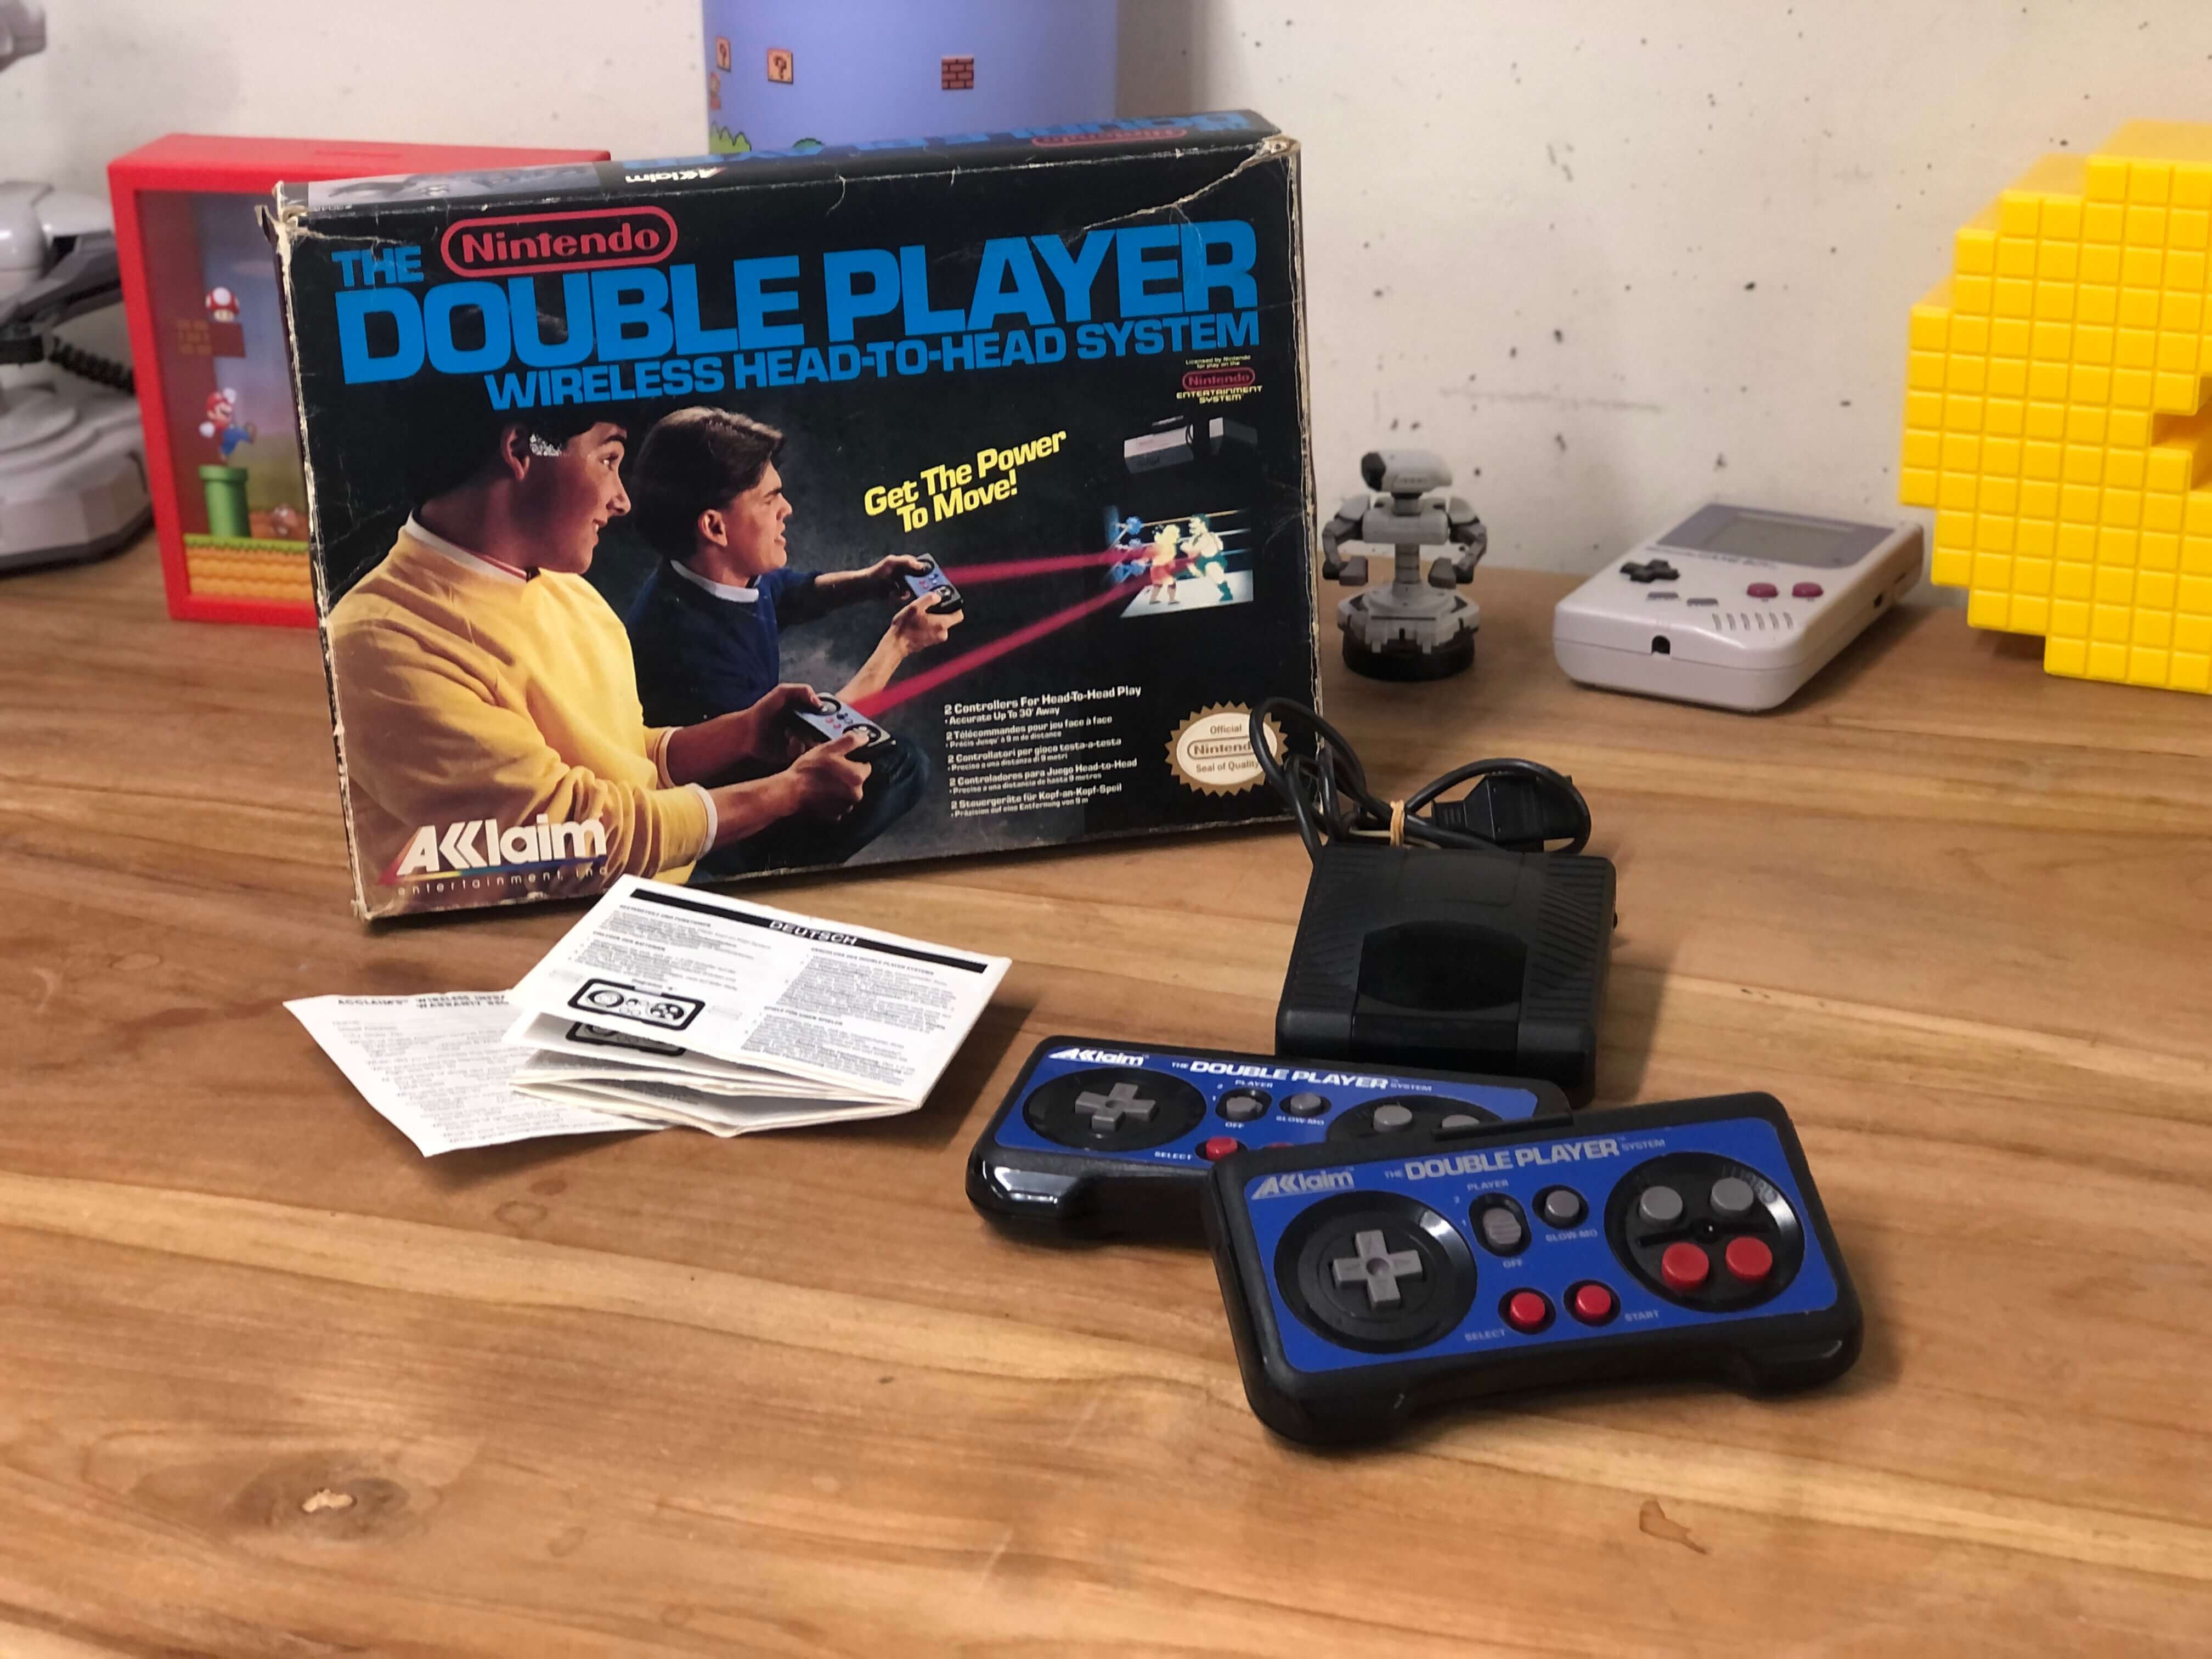 Akklaim Wireless Double Player System [Complete] - Nintendo NES Hardware